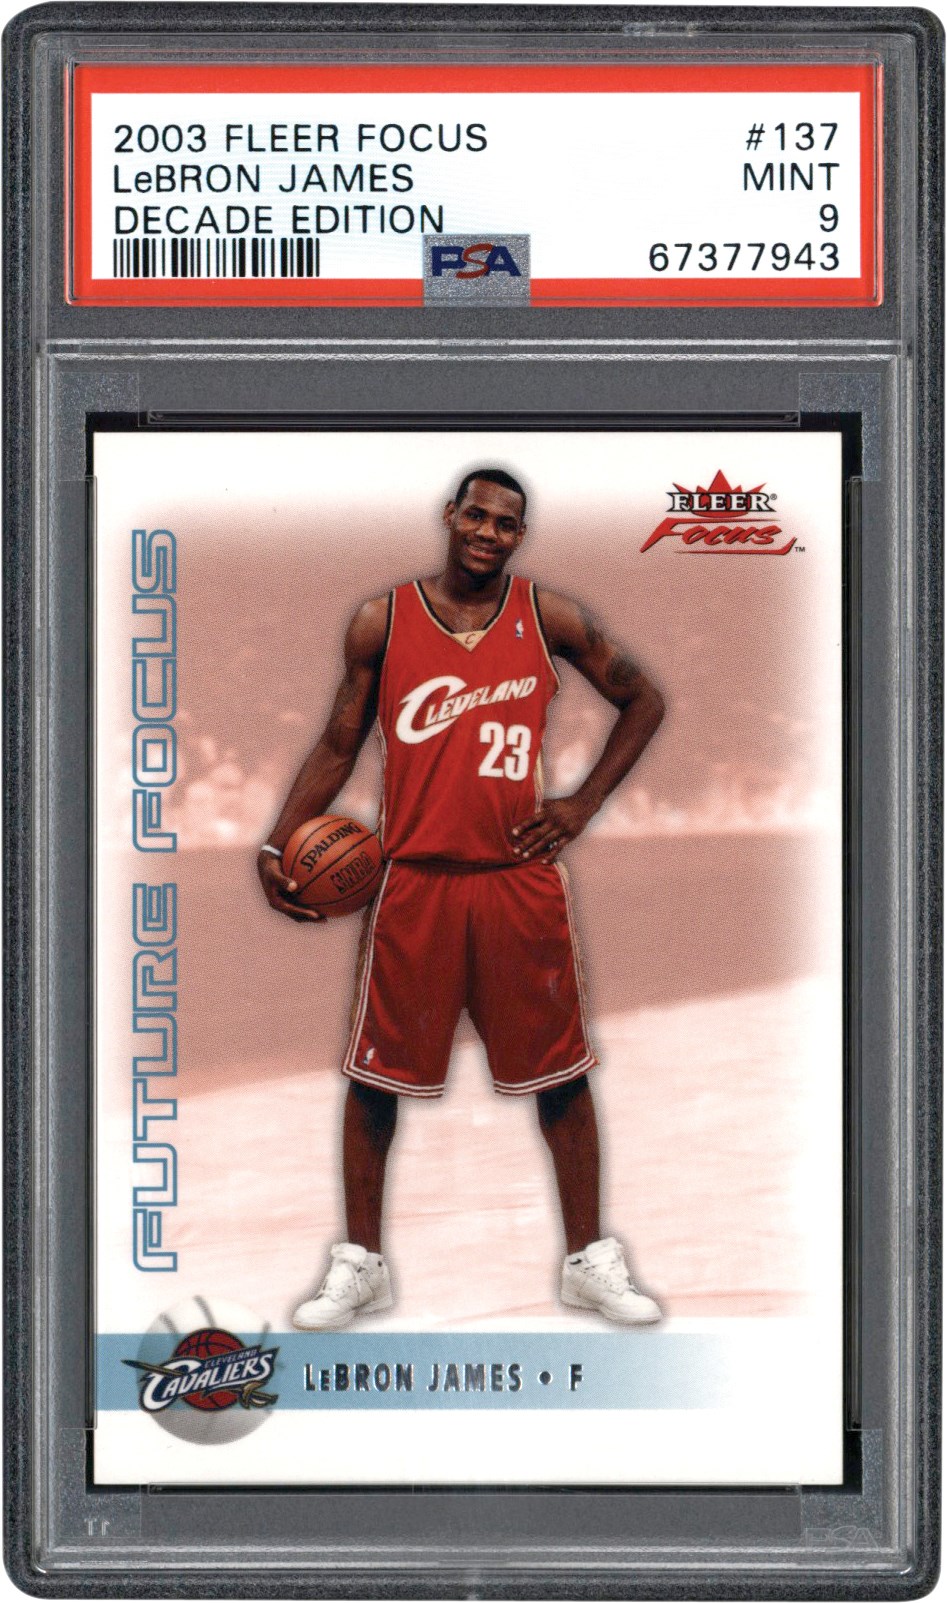 Basketball Cards - Rare 2003 Fleer Focus Basketball Decade Edition #137 LeBron James Rookie Card #9/10 PSA MINT 9 (Pop 2 Highest Graded)